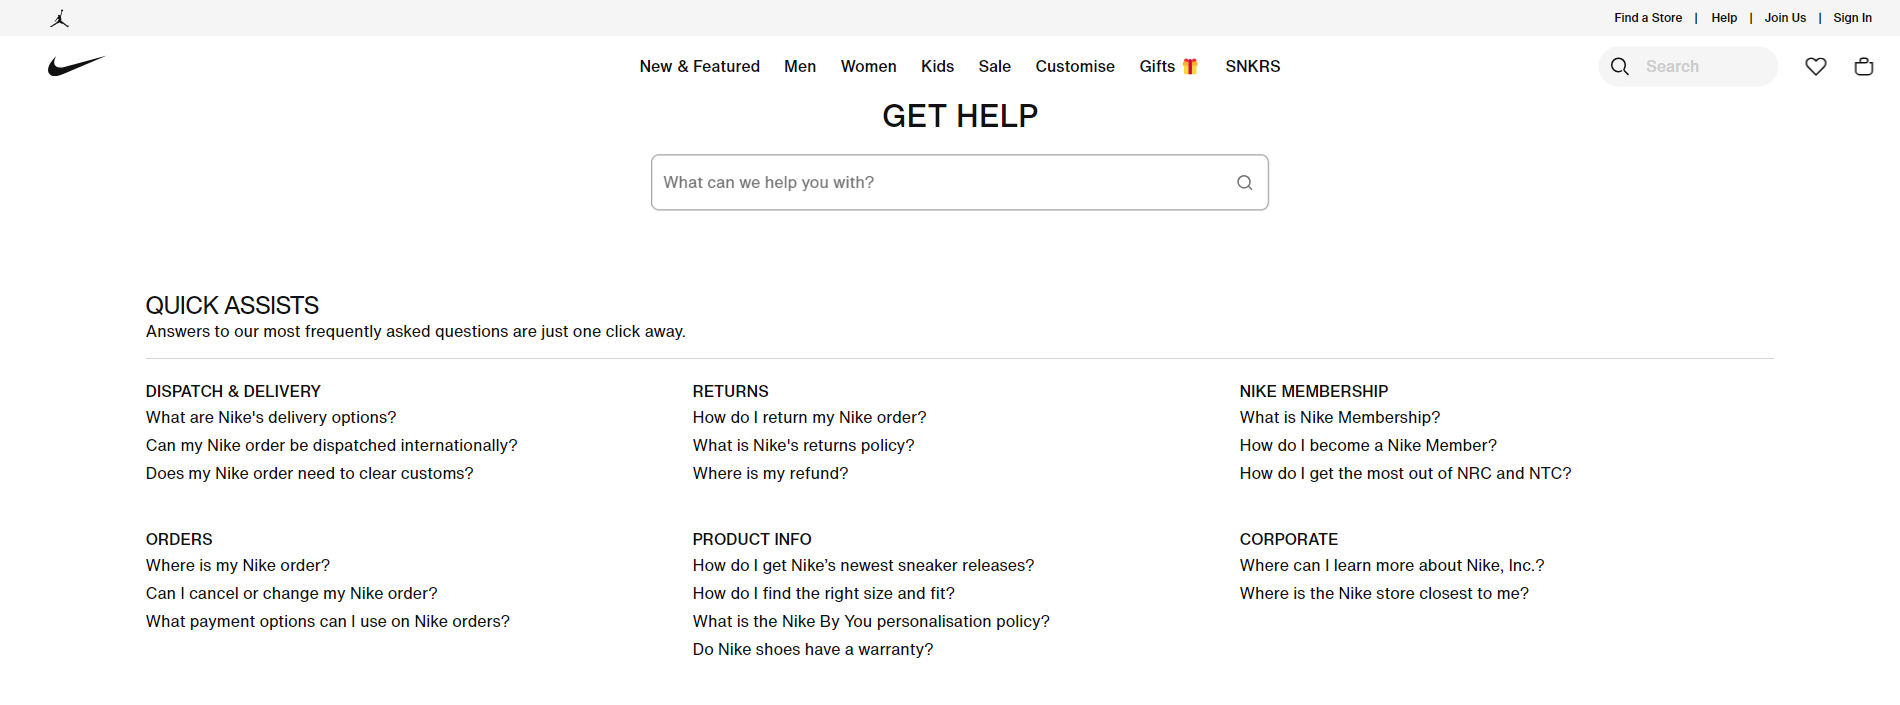 Nike - FAQ Page Example